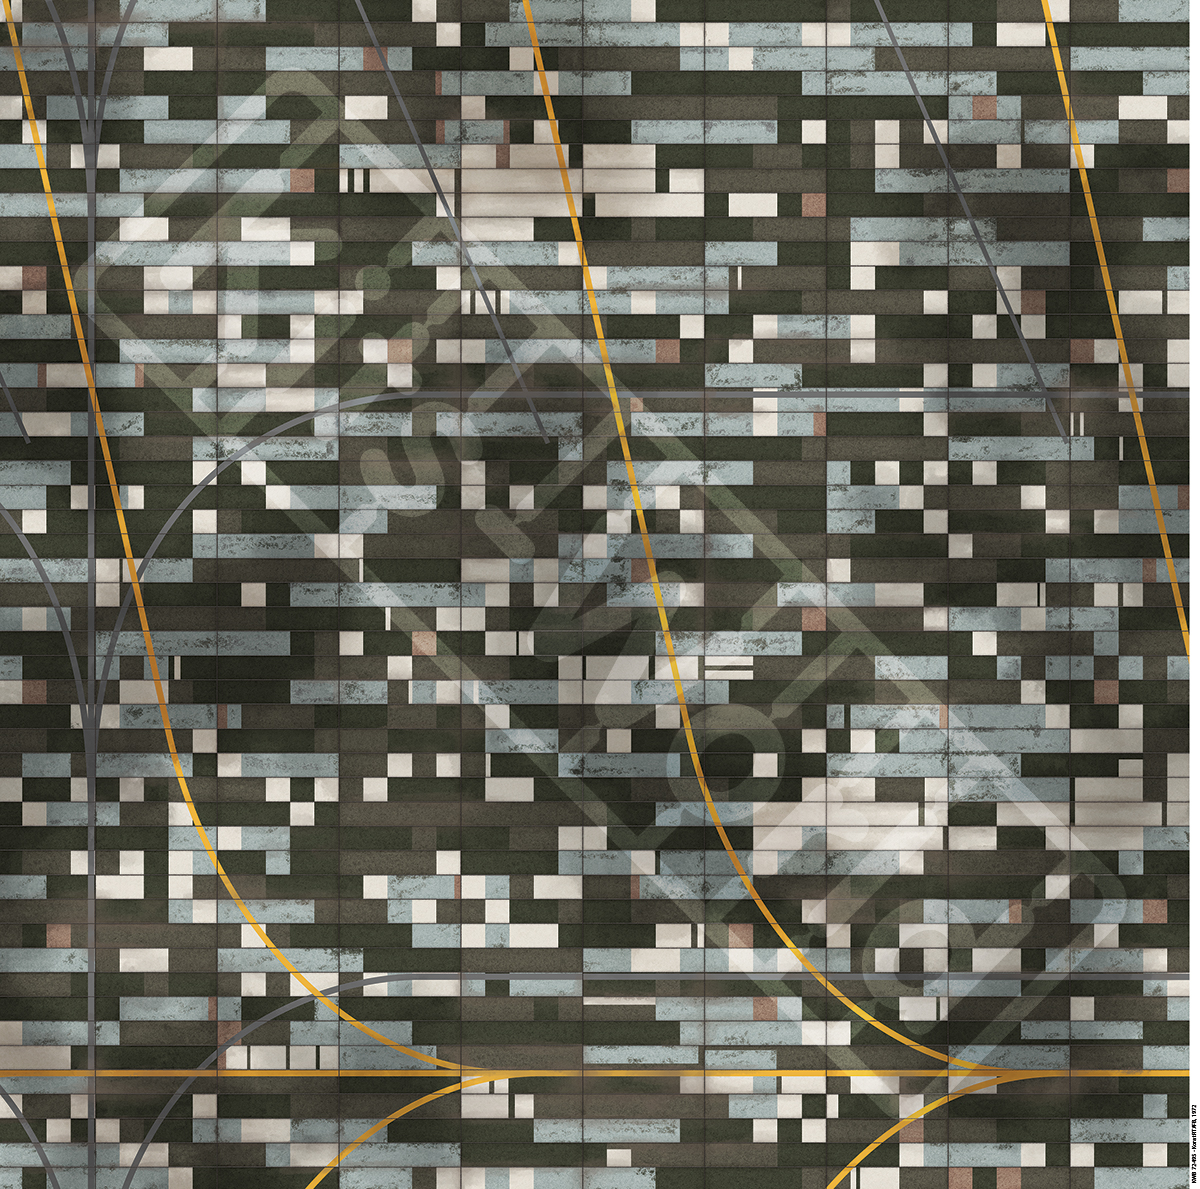 Kitsworld Diorama Adhesive Base 1:72nd scale - Korat RTAFB- 1972 KWB 72-495 Korat RTAFB, 1972 GPS- 14º55’47.83” N  102º04’45.01” E (General location) 